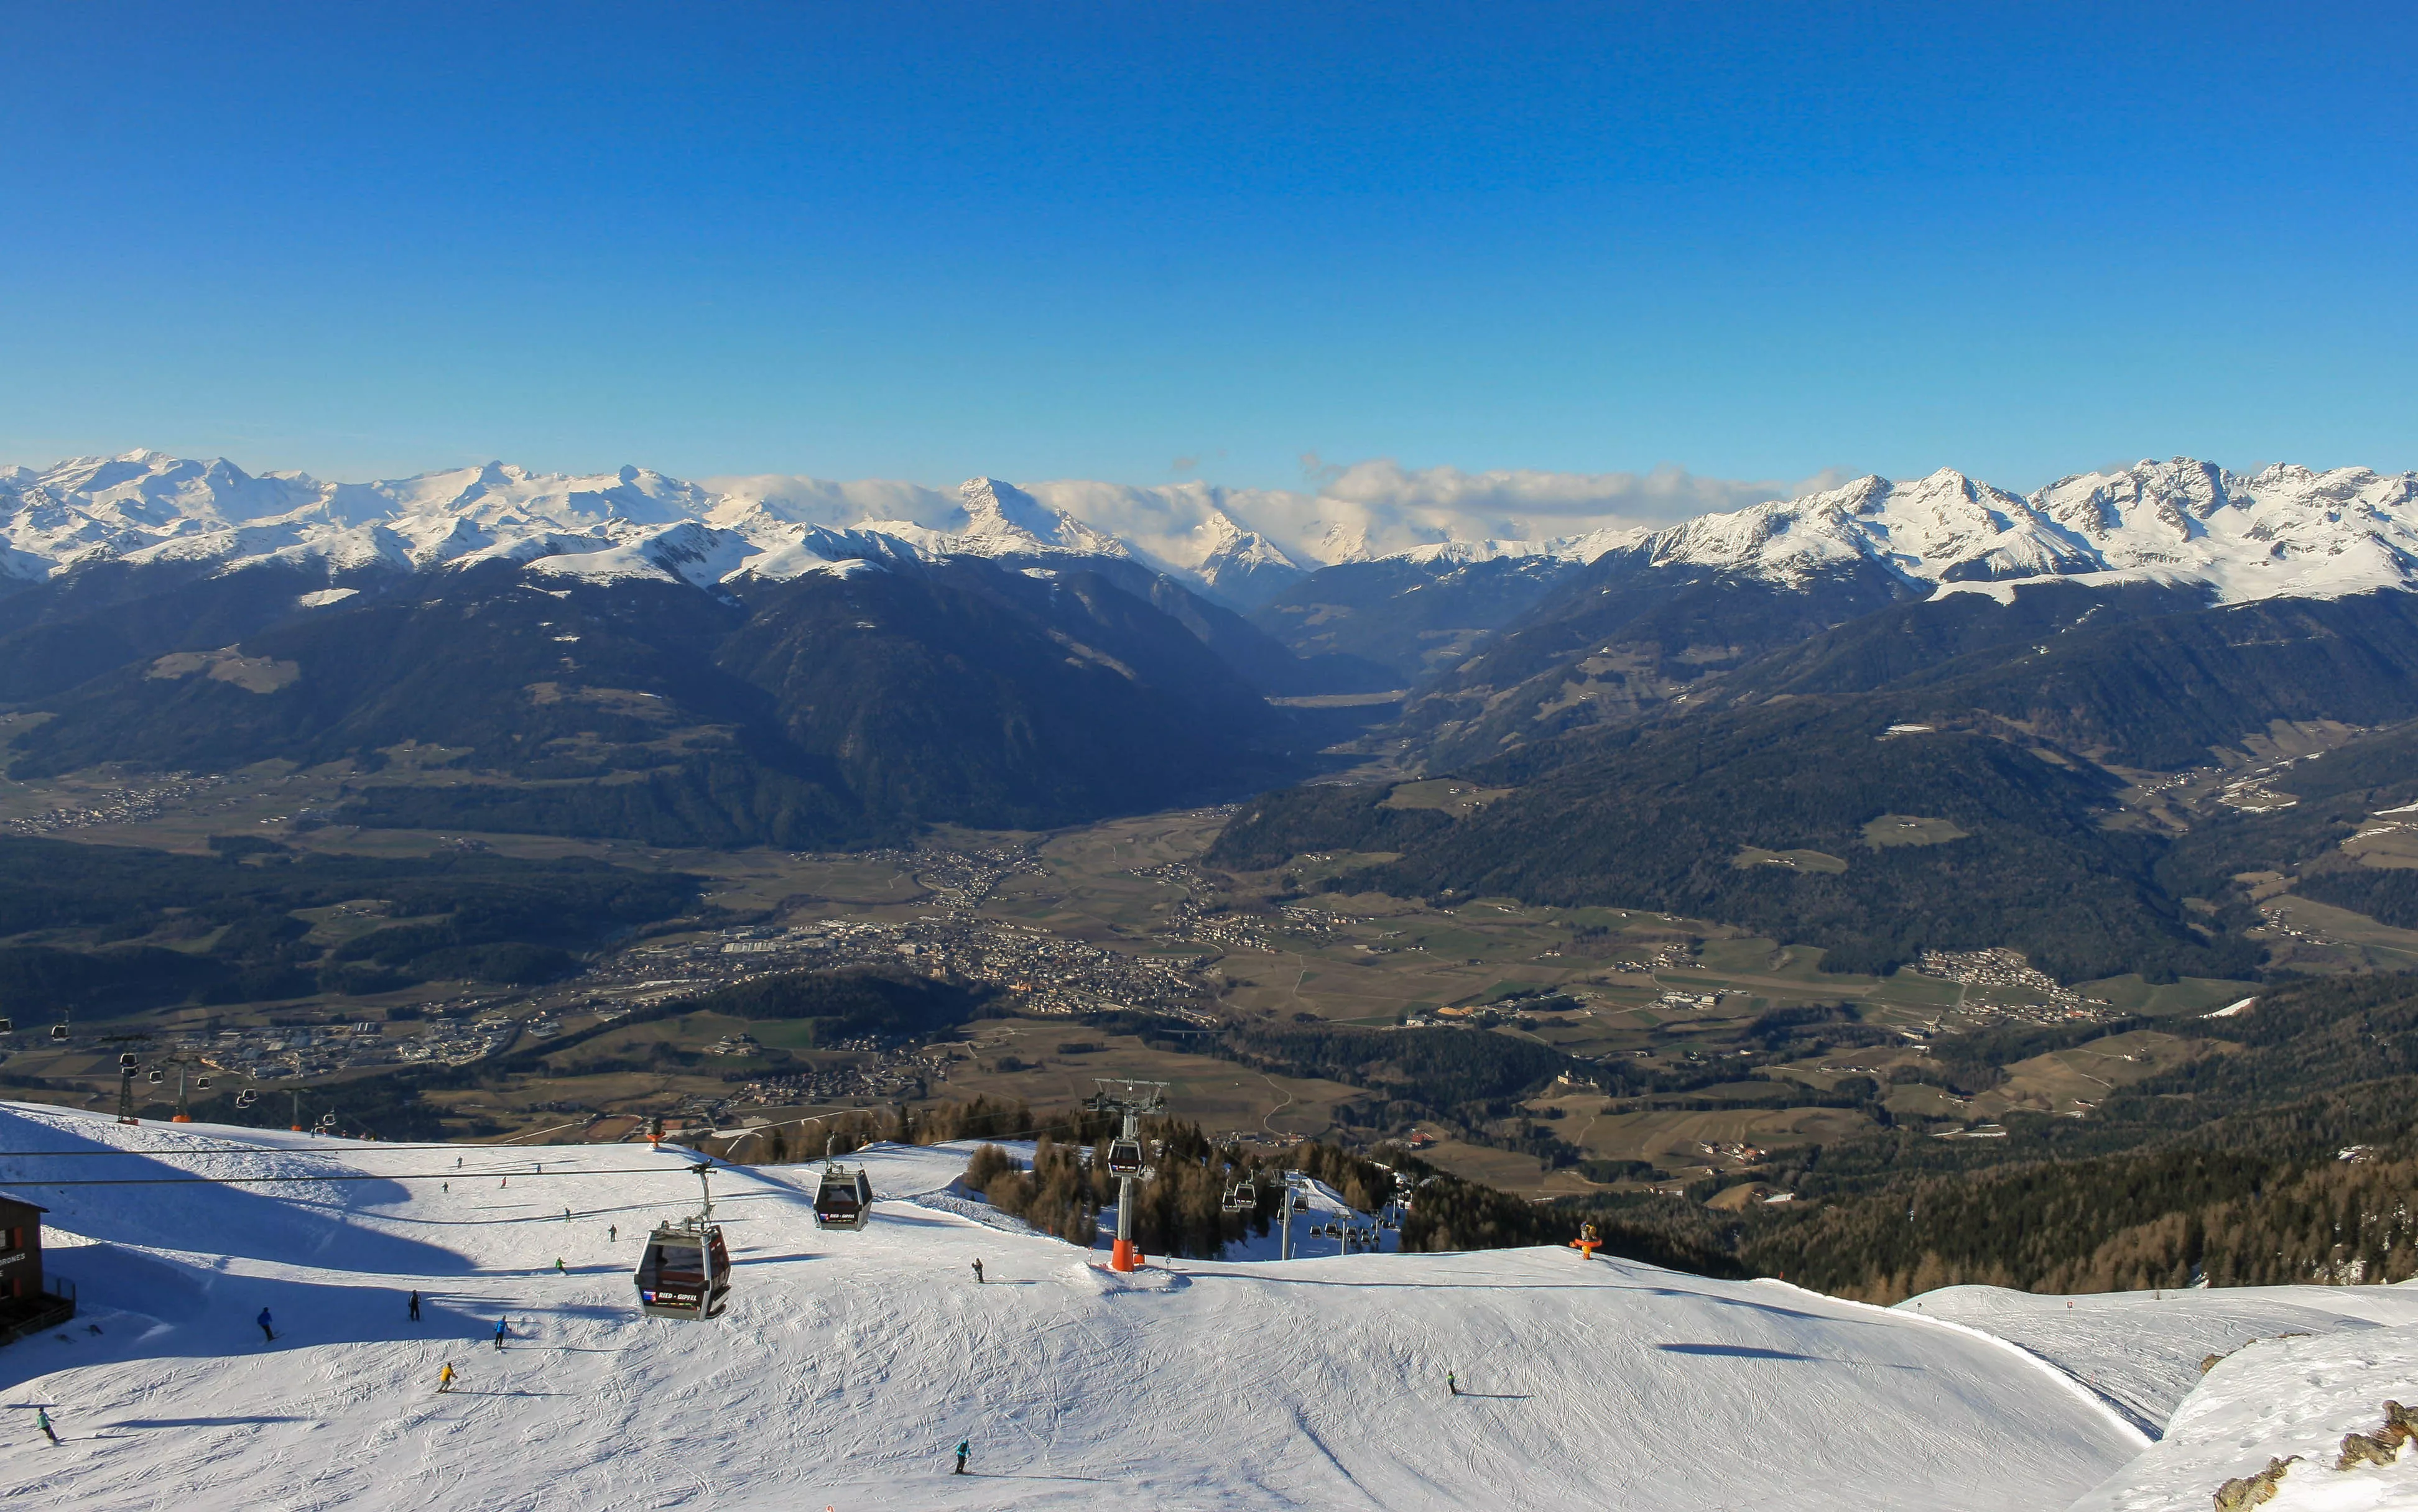 Skigebiet Kronplatz in Italy, Europe | Snowboarding,Mountains,Skiing - Rated 4.1